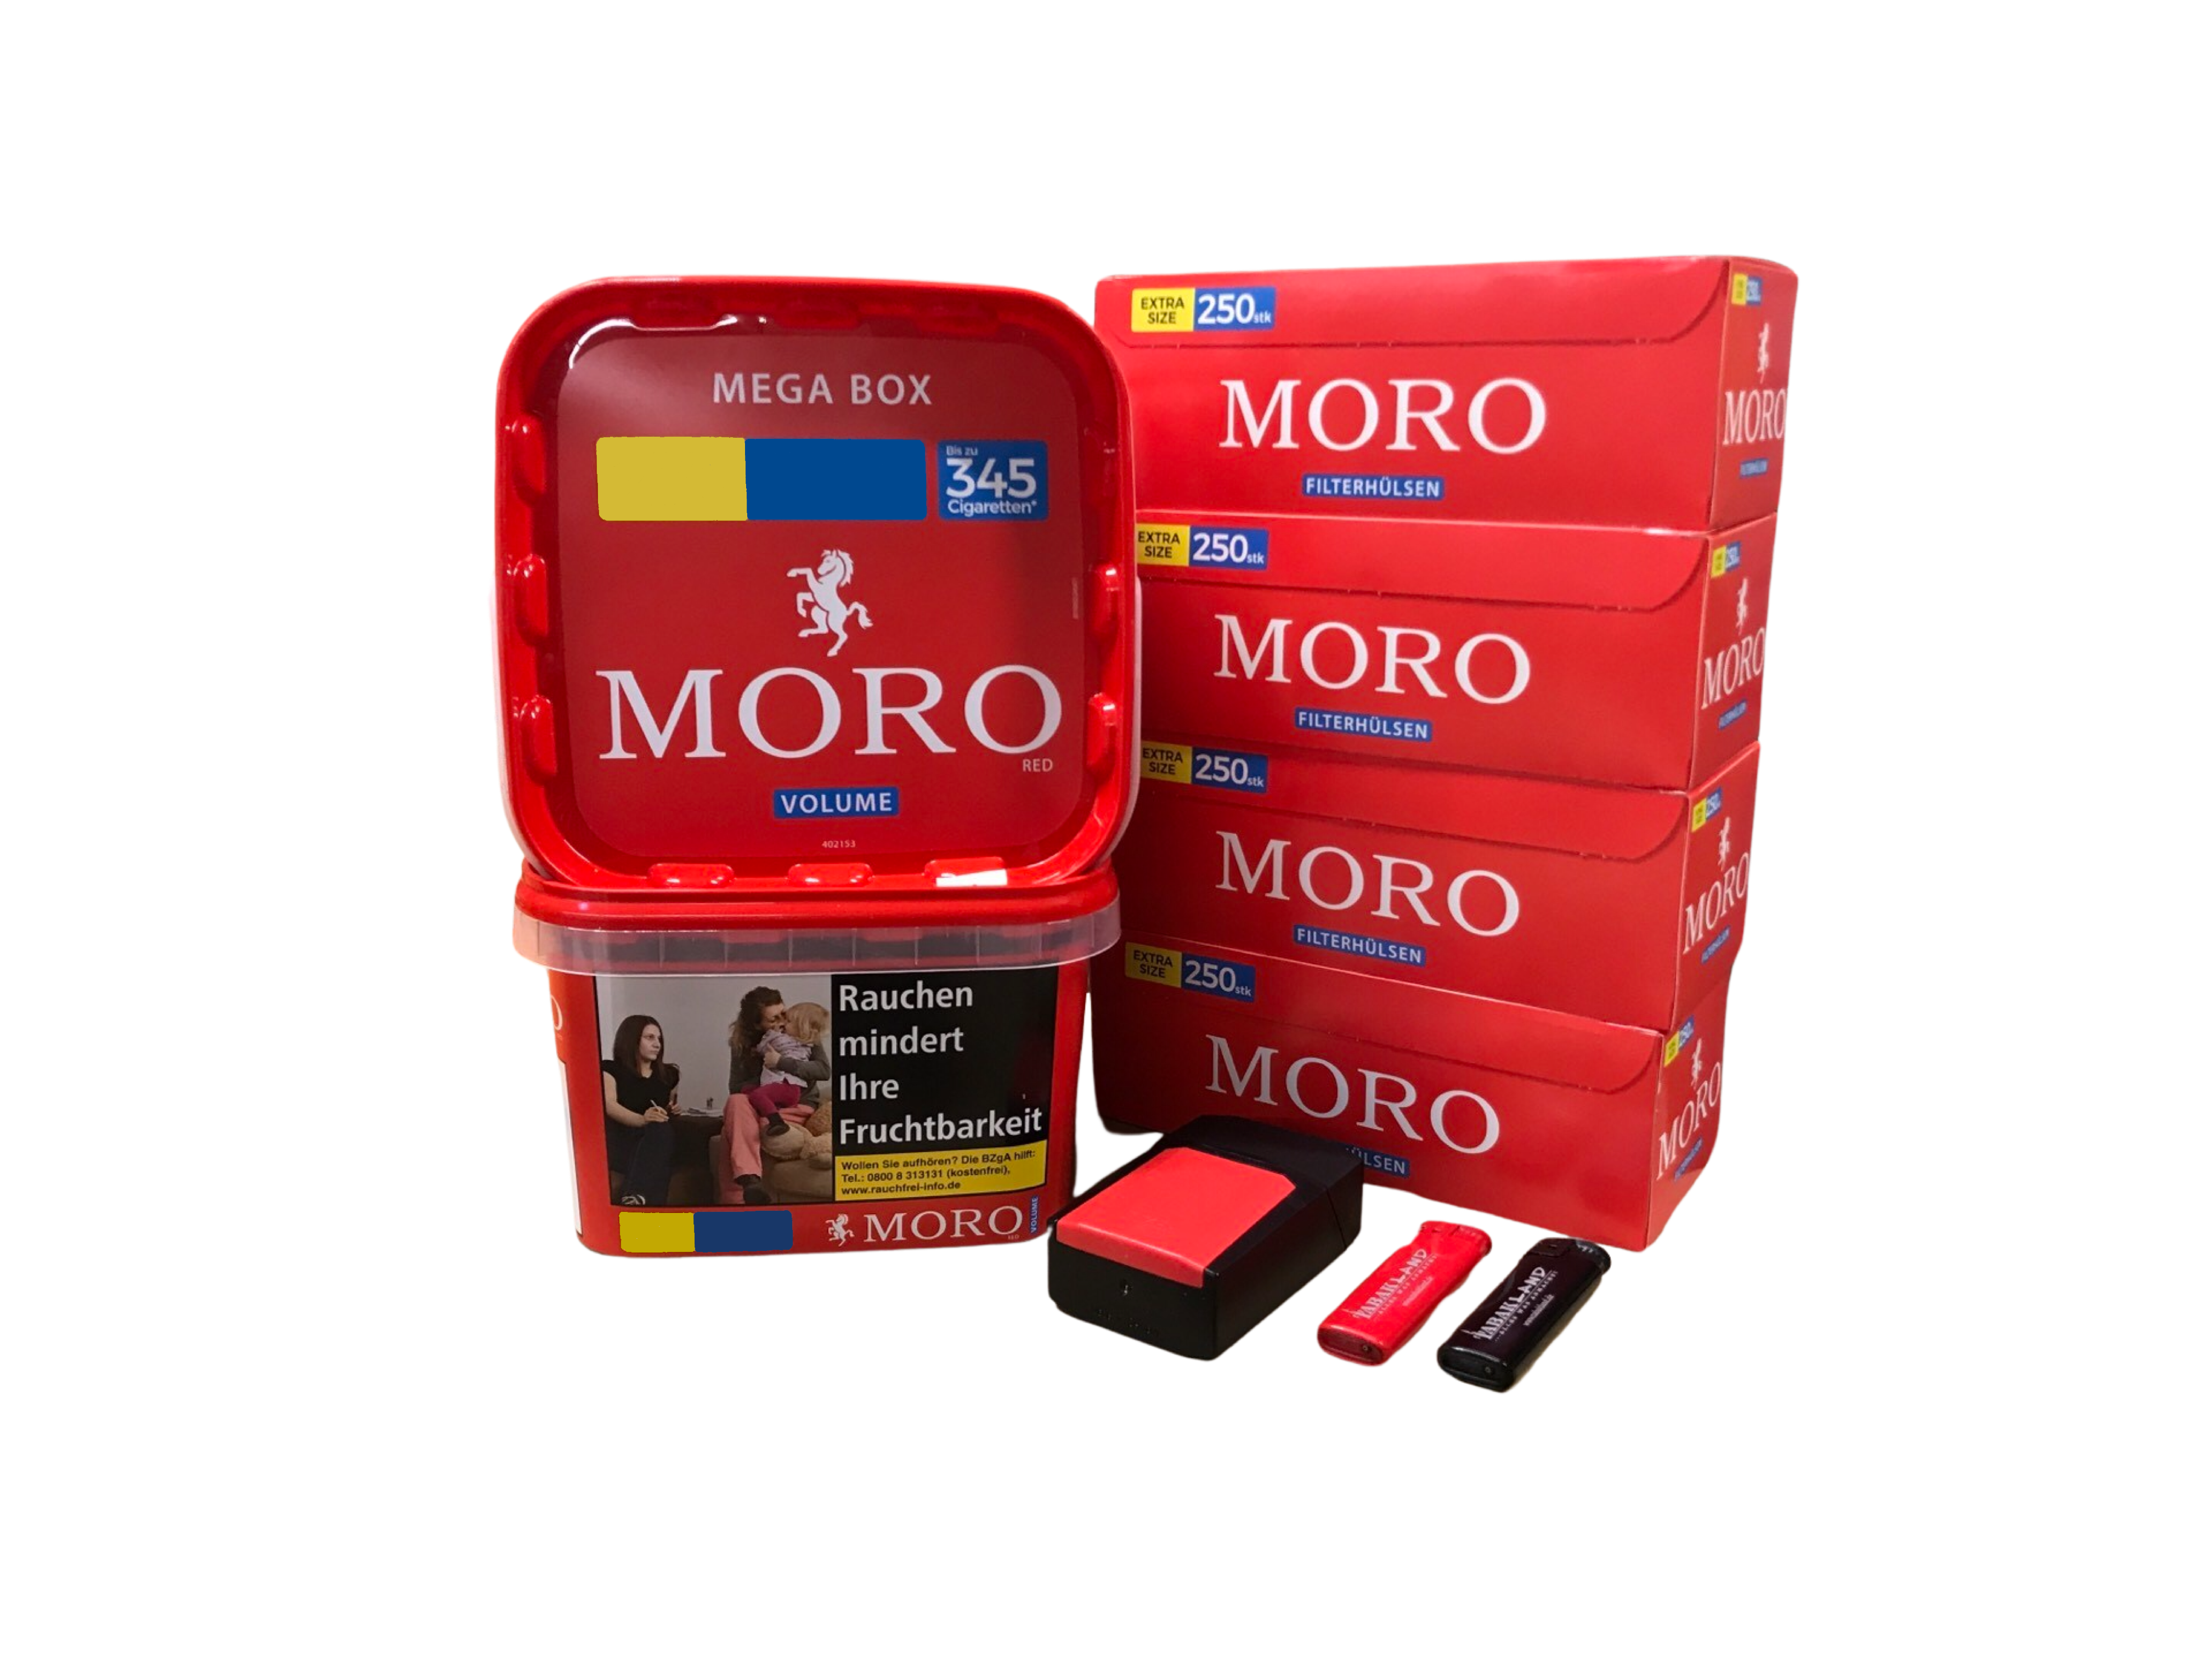 2x Moro Rot Volumen 155g + 1000 Moro Filterhülsen + 1x Etui inkl. 2x Feuerzeug